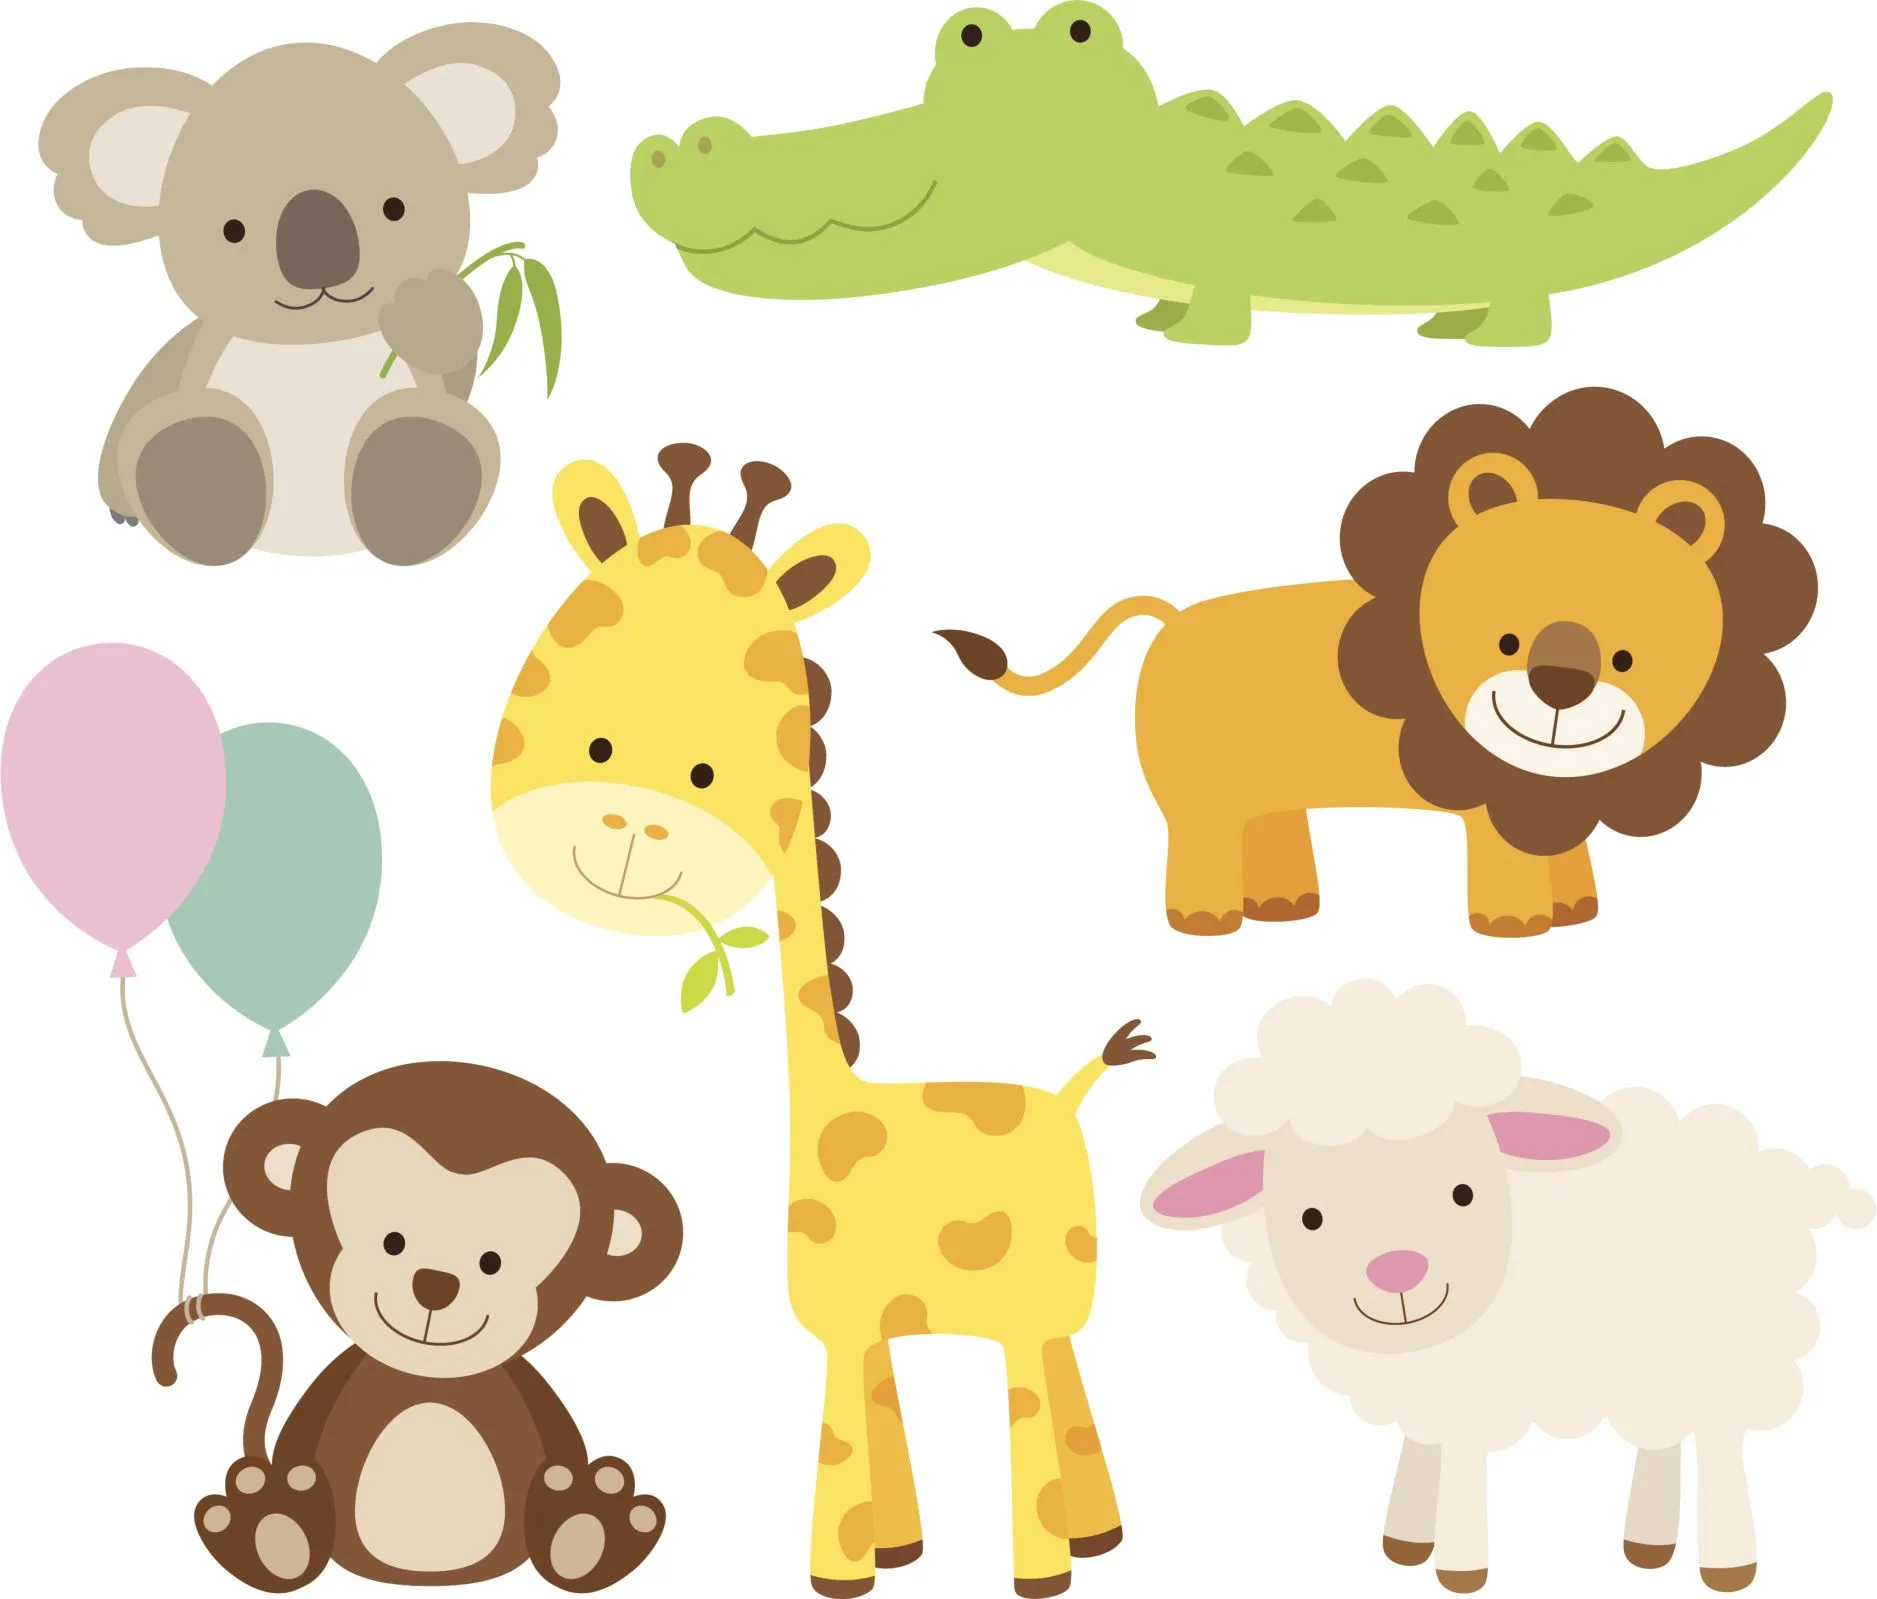 Imágenes para baby shower | Animales, Duchas y Baby showers